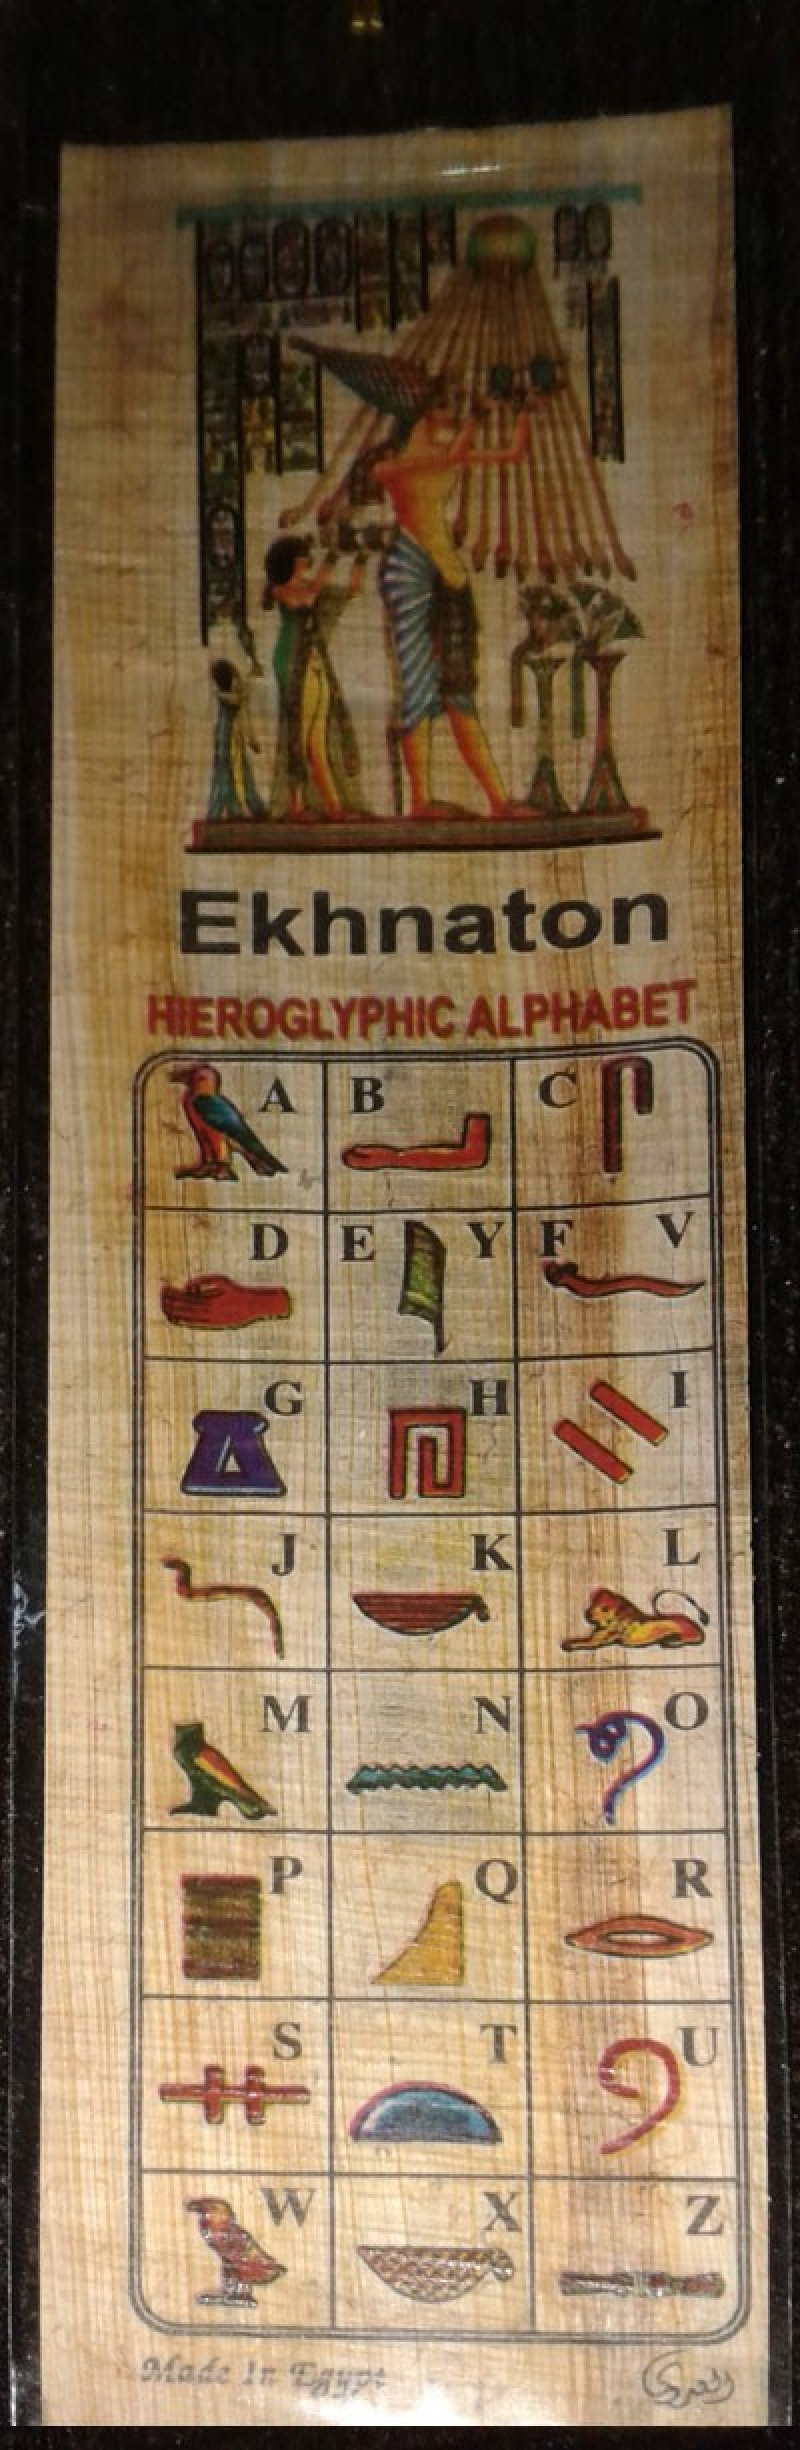 Hieroglyphic Alphabet Egyptian Papyrus Bookmark